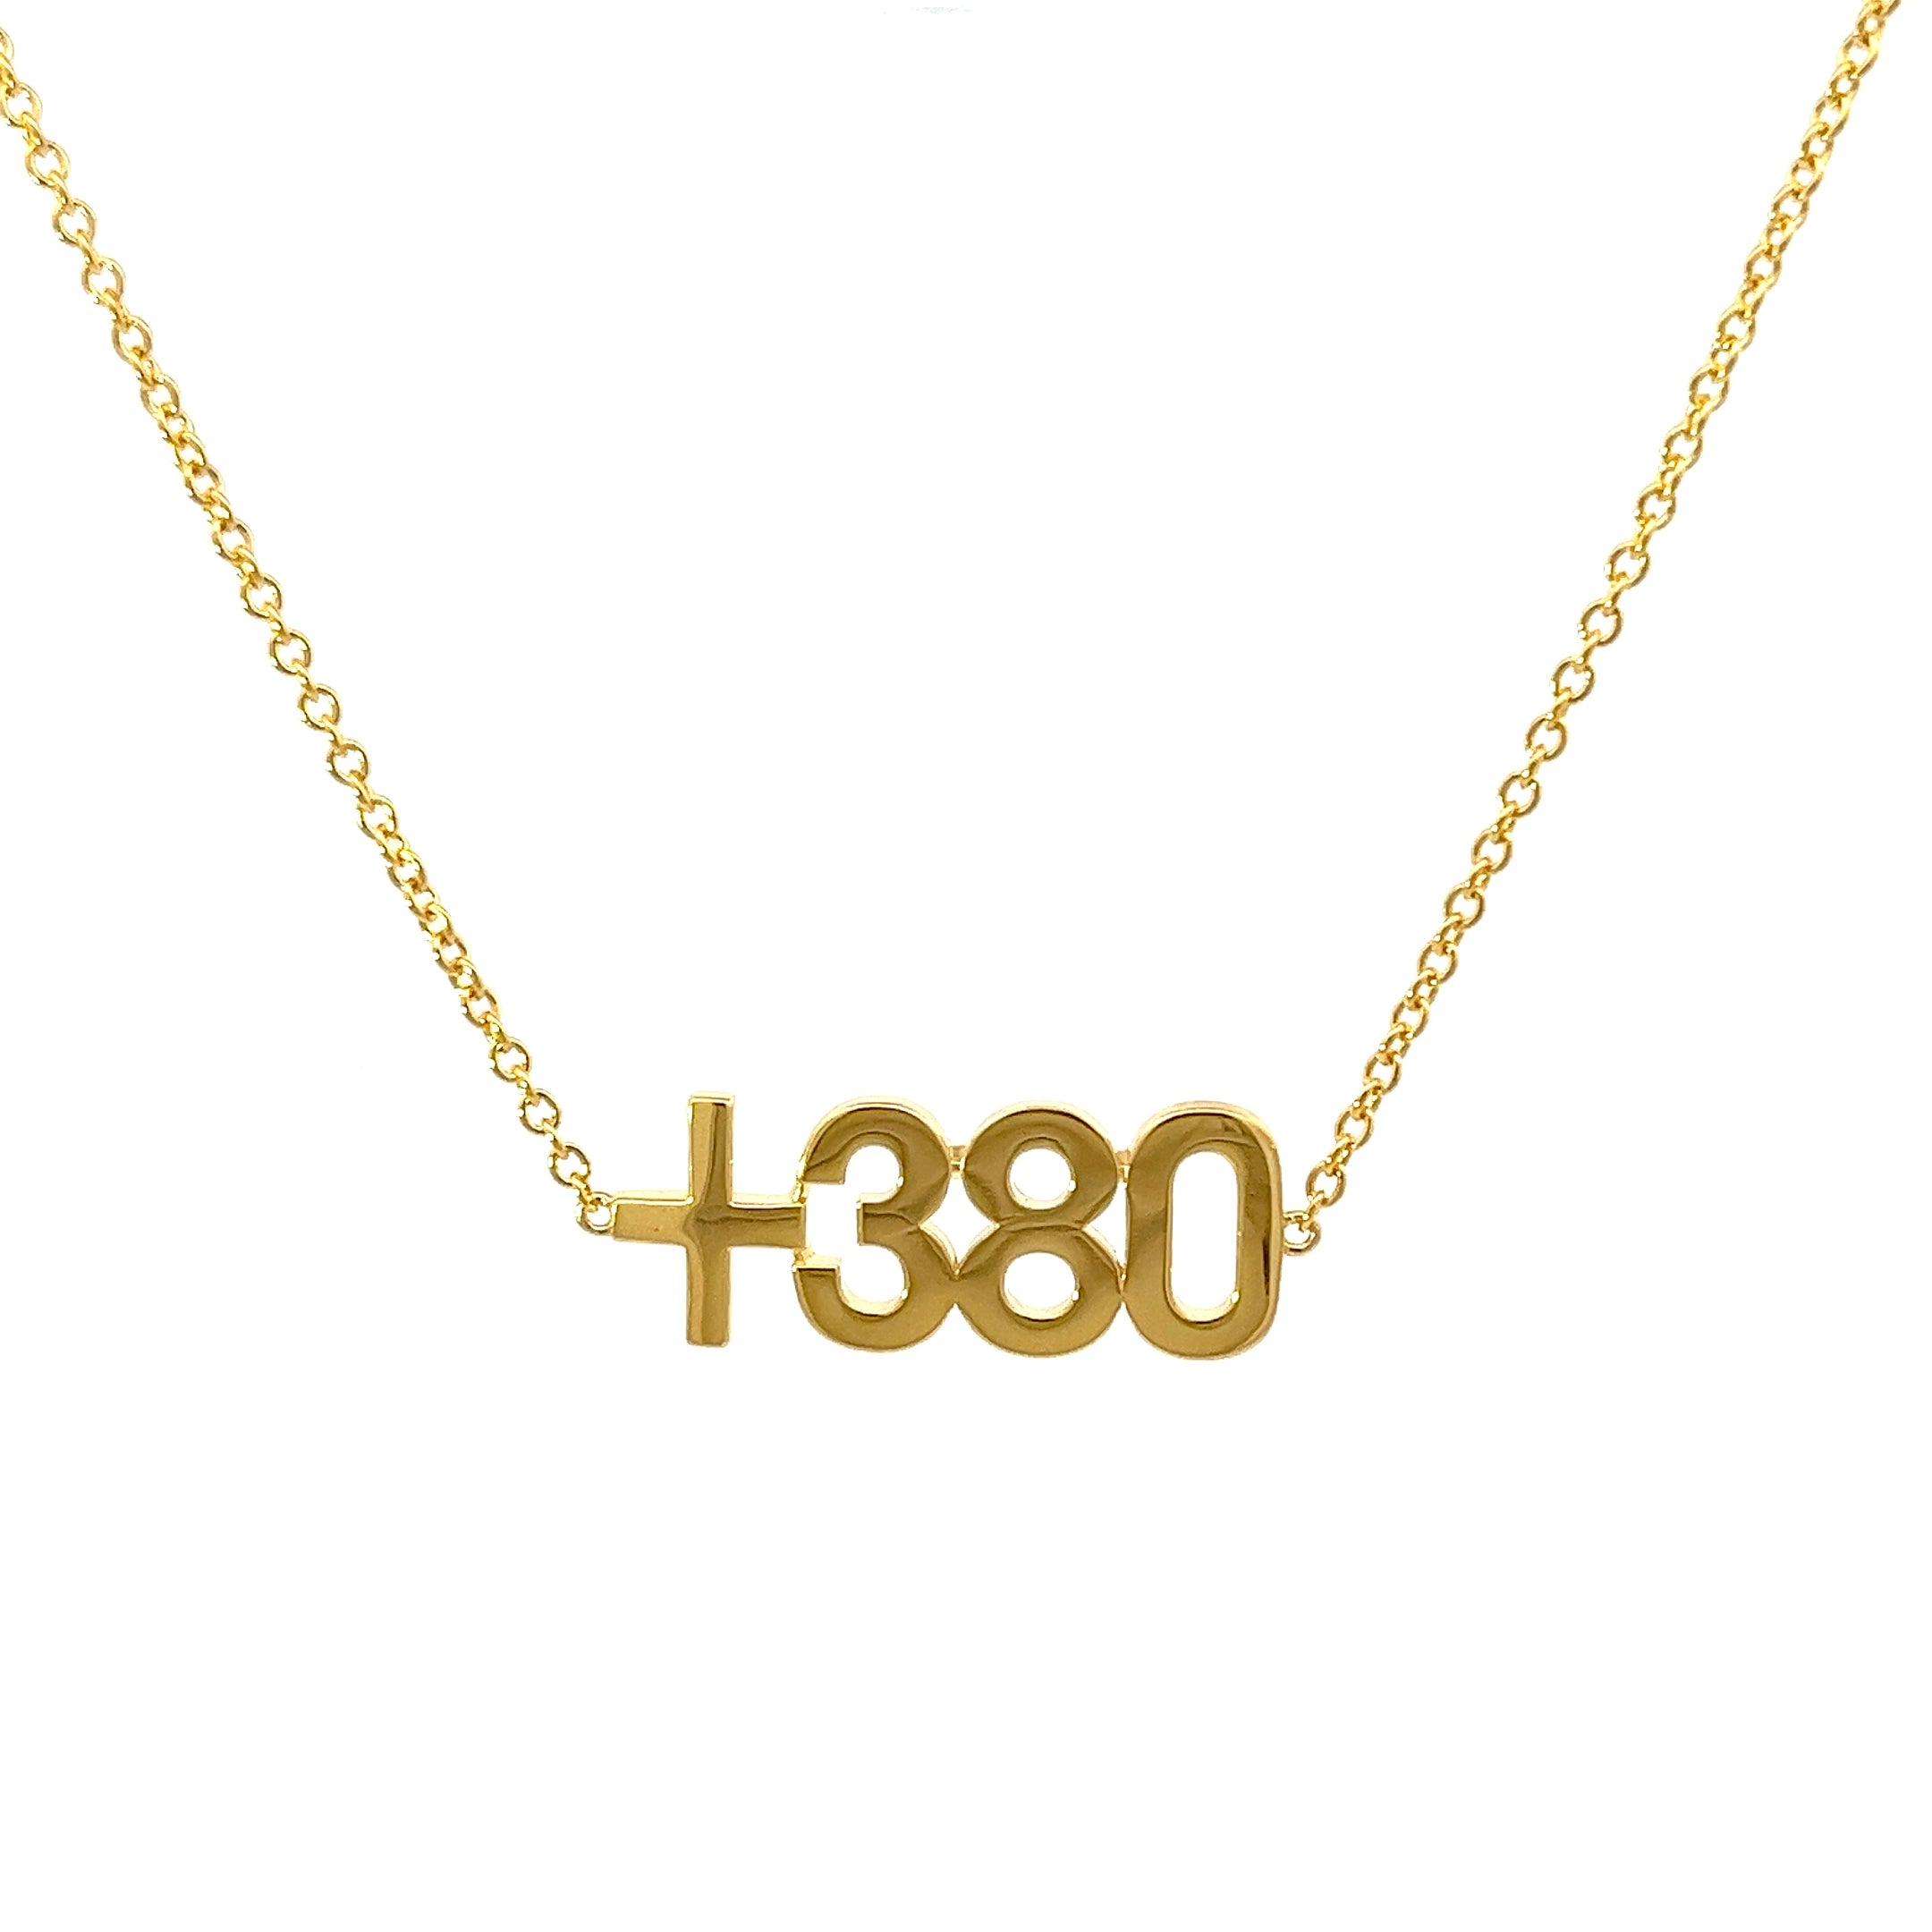 +380 Bracelet du code ukrainien